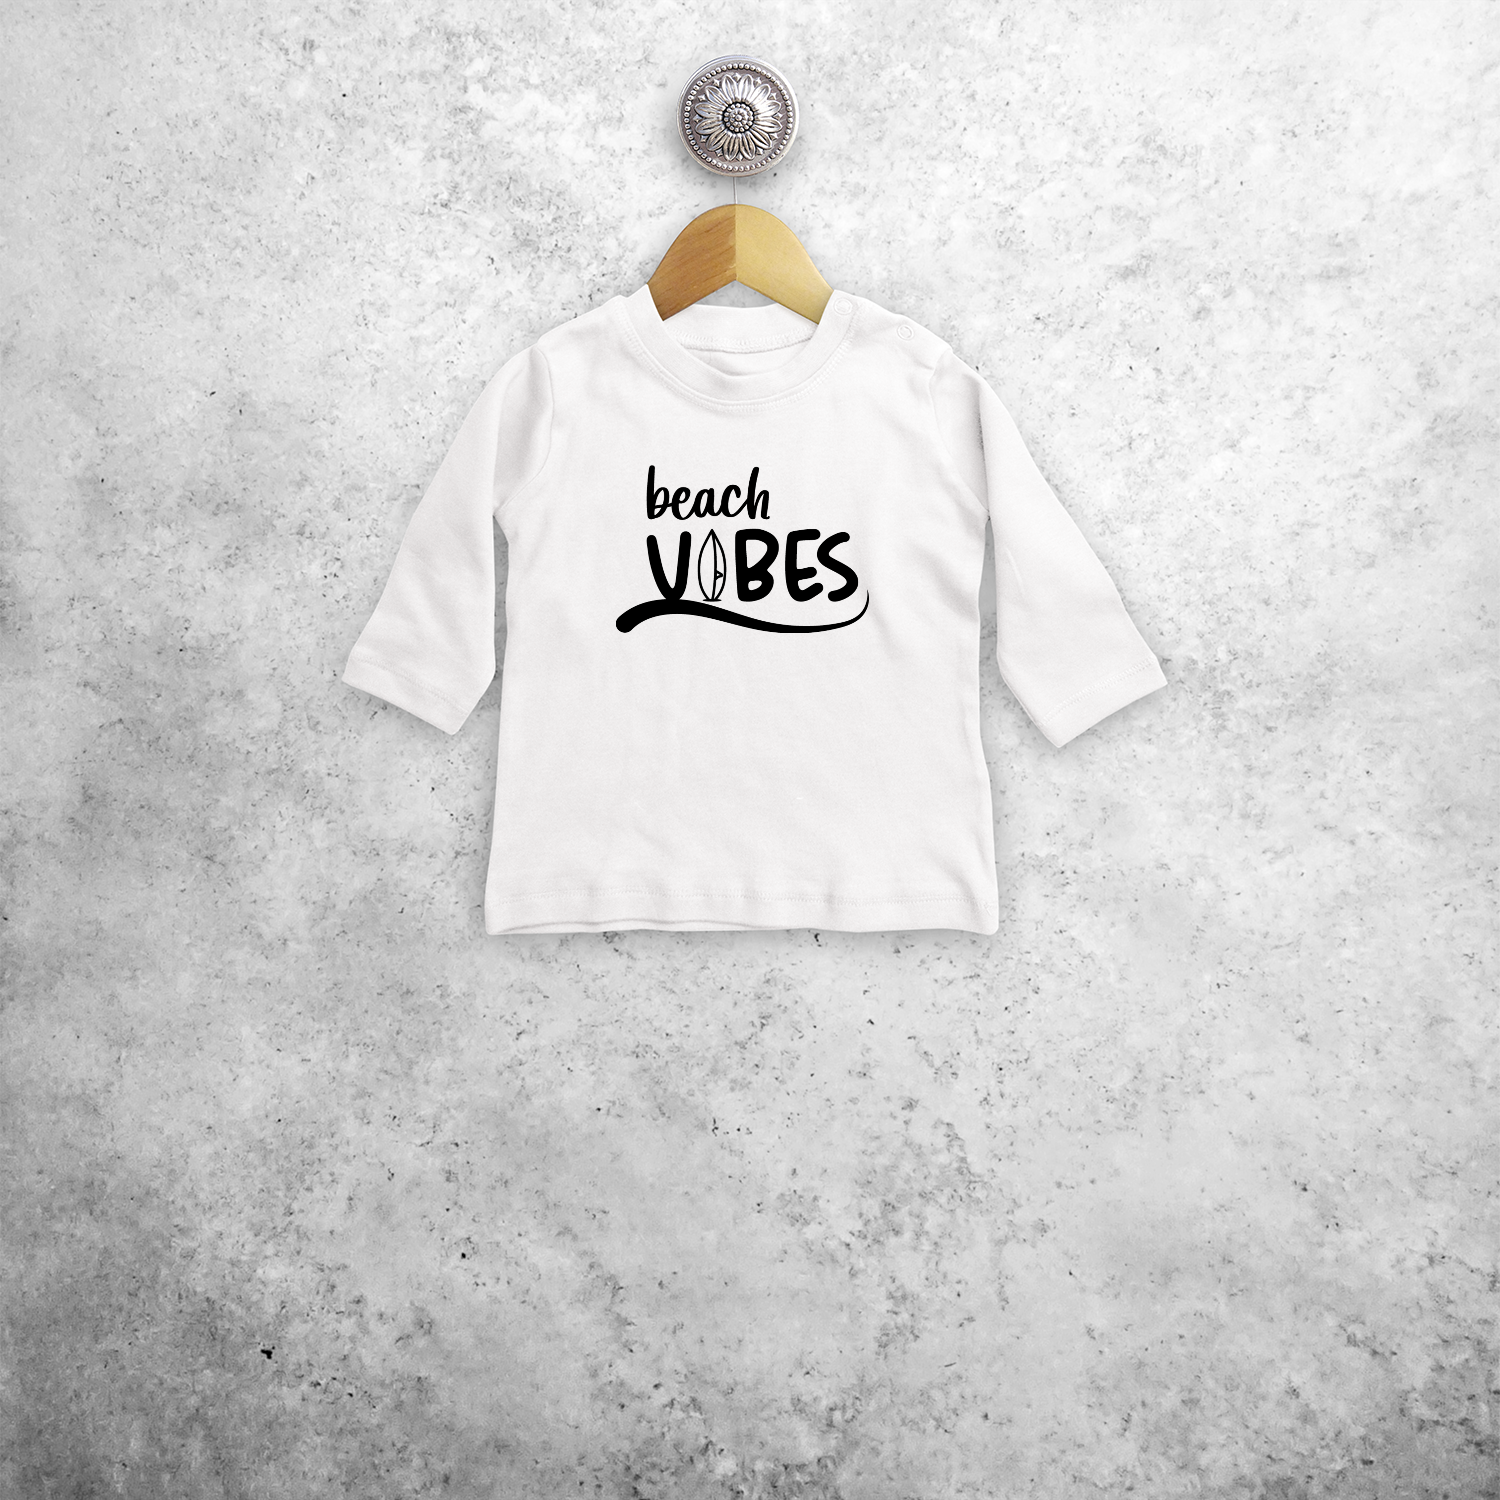 'Beach vibes' baby longsleeve shirt